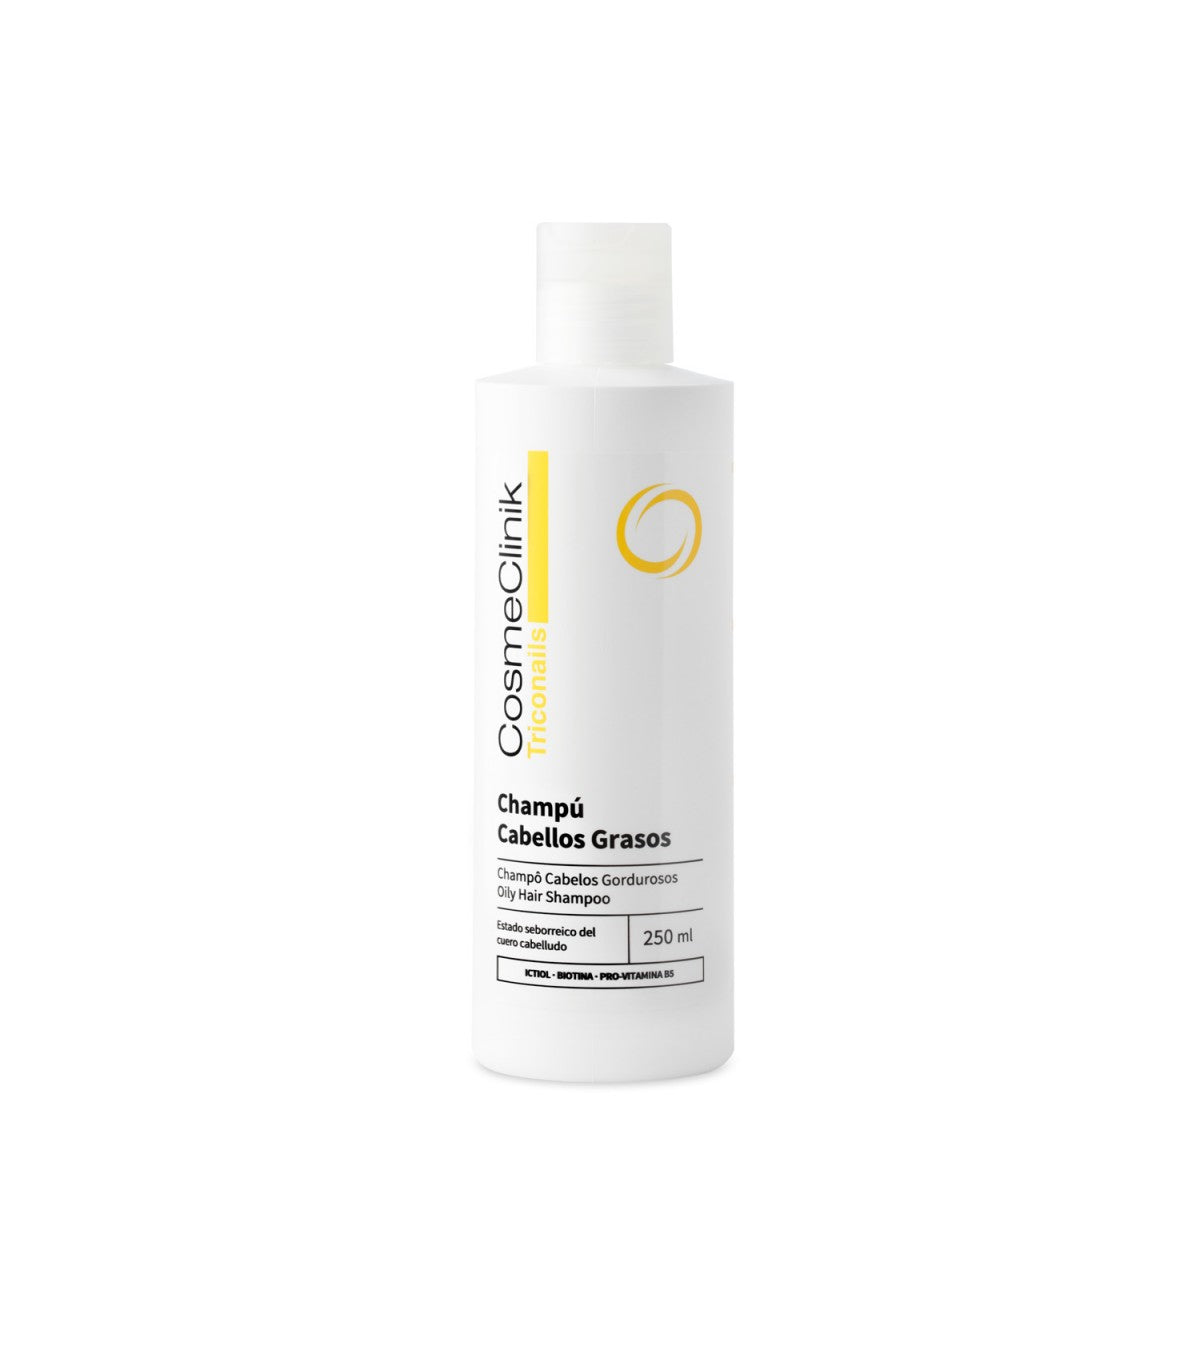 Triconails Shampoo for Oily Hair (250ml)